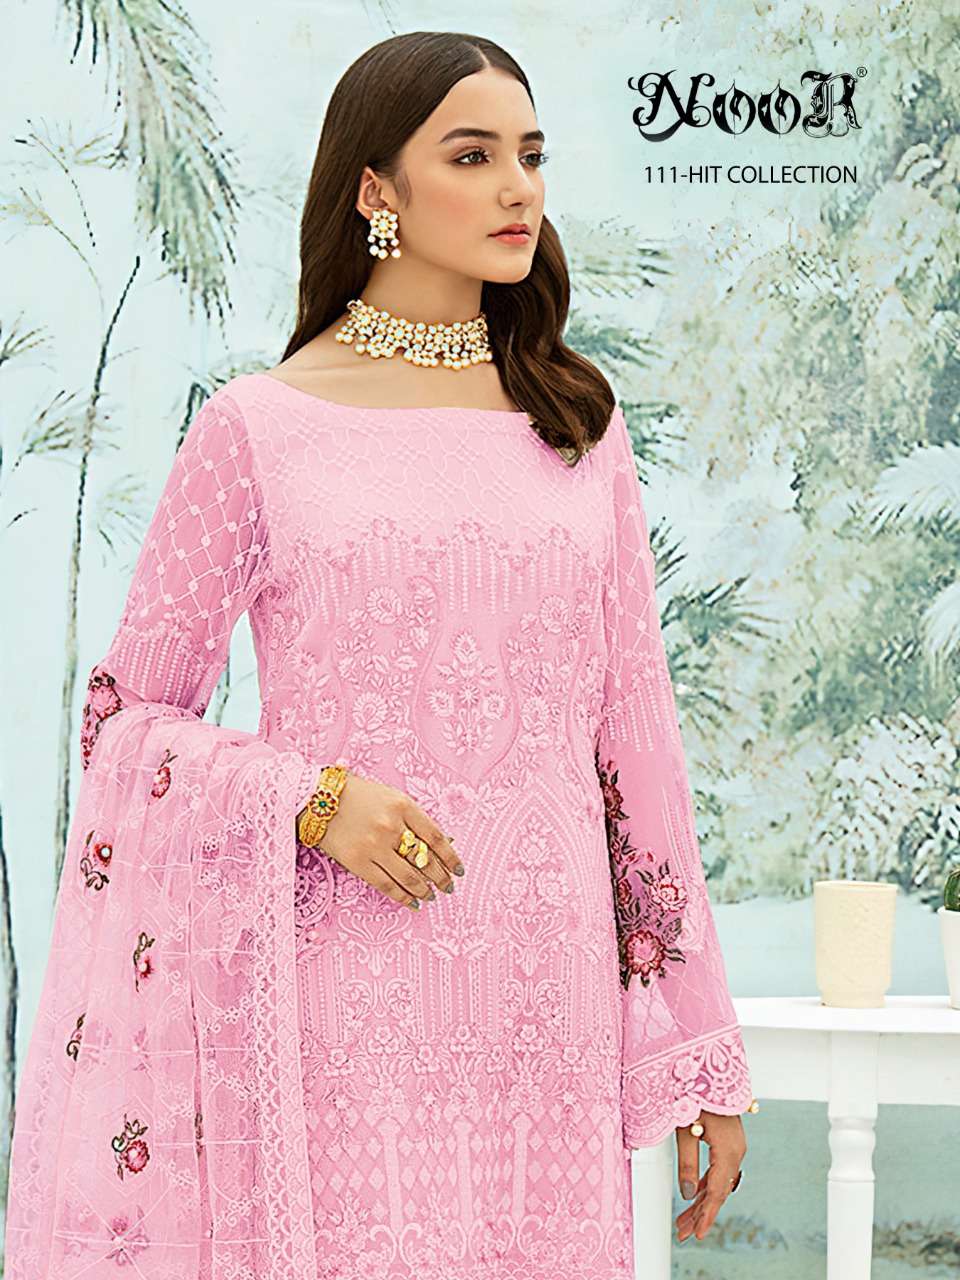 noor 111 hit collection pakistani light color dress design 